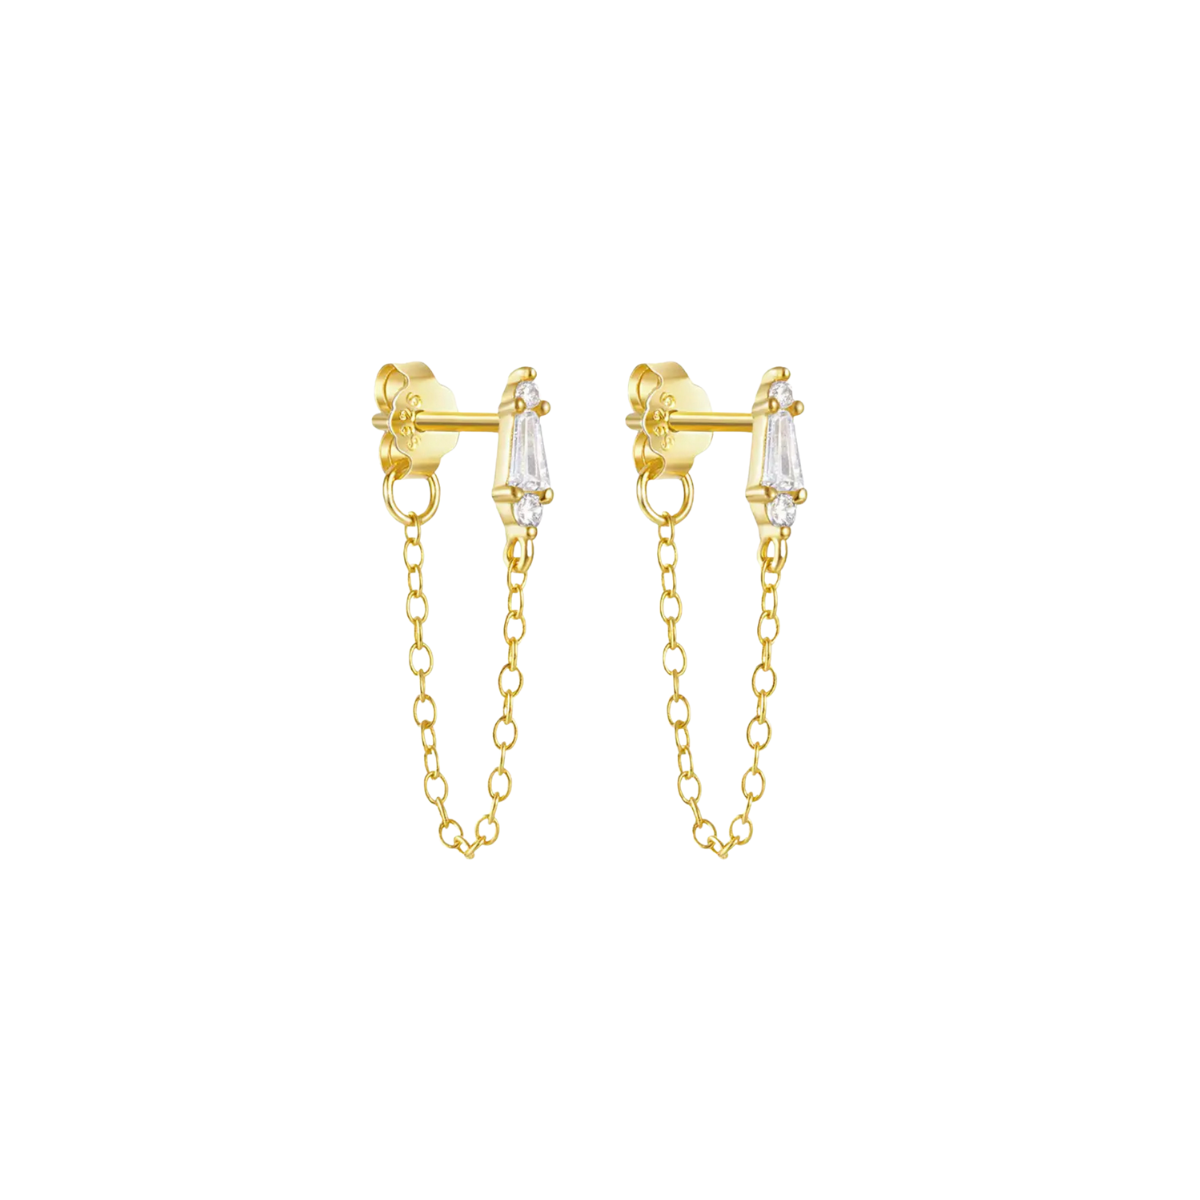 Roam 18k Gold Plated Crystal Earrings